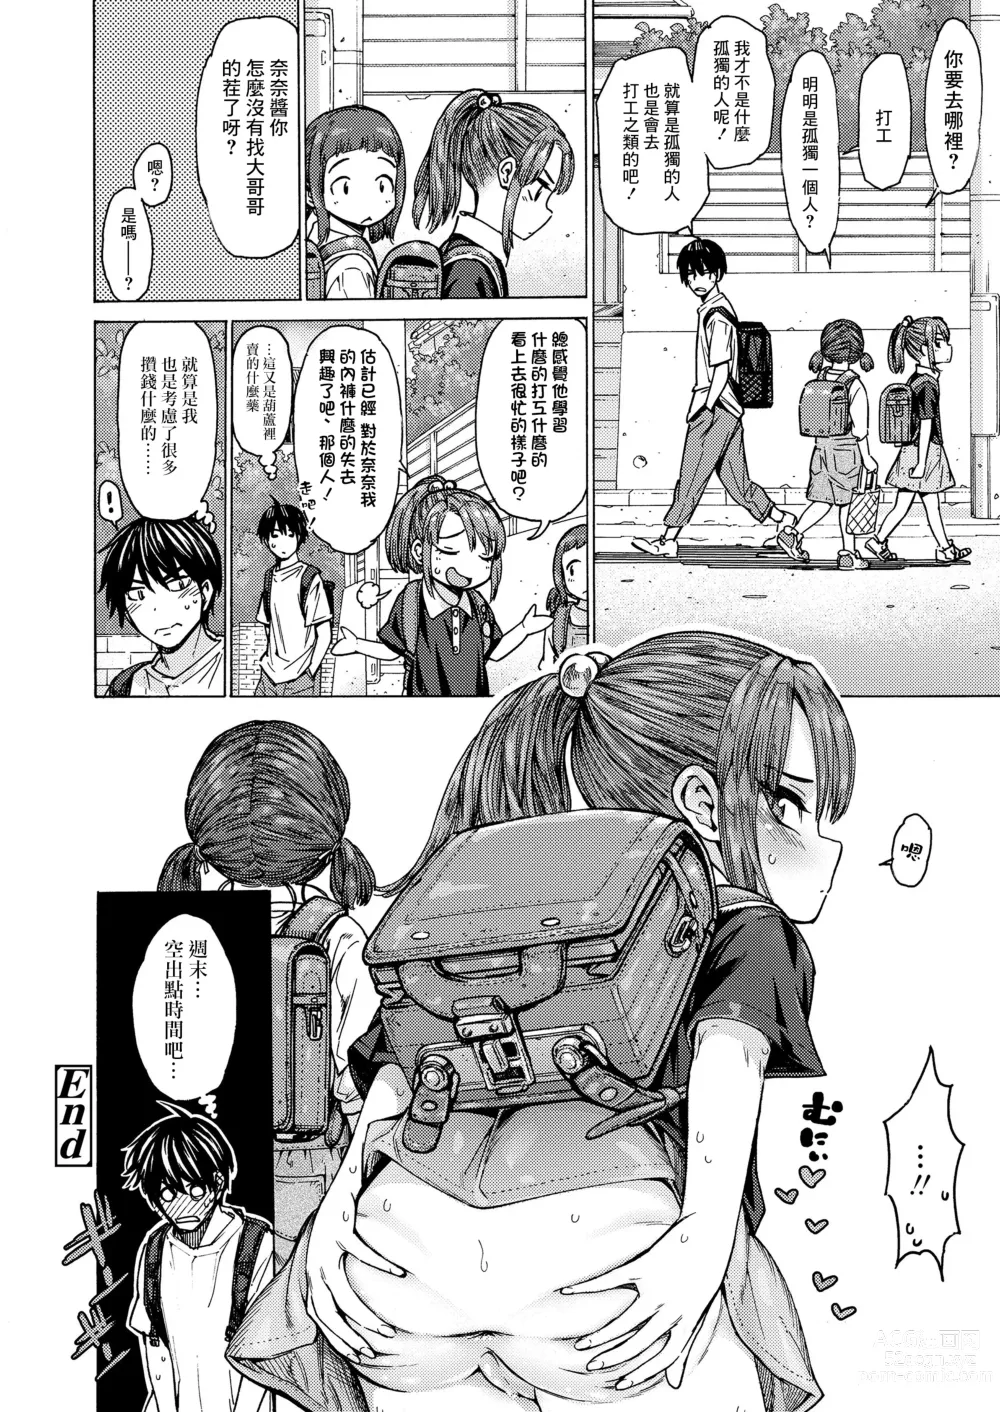 Page 24 of manga Kyou no Pantsu!